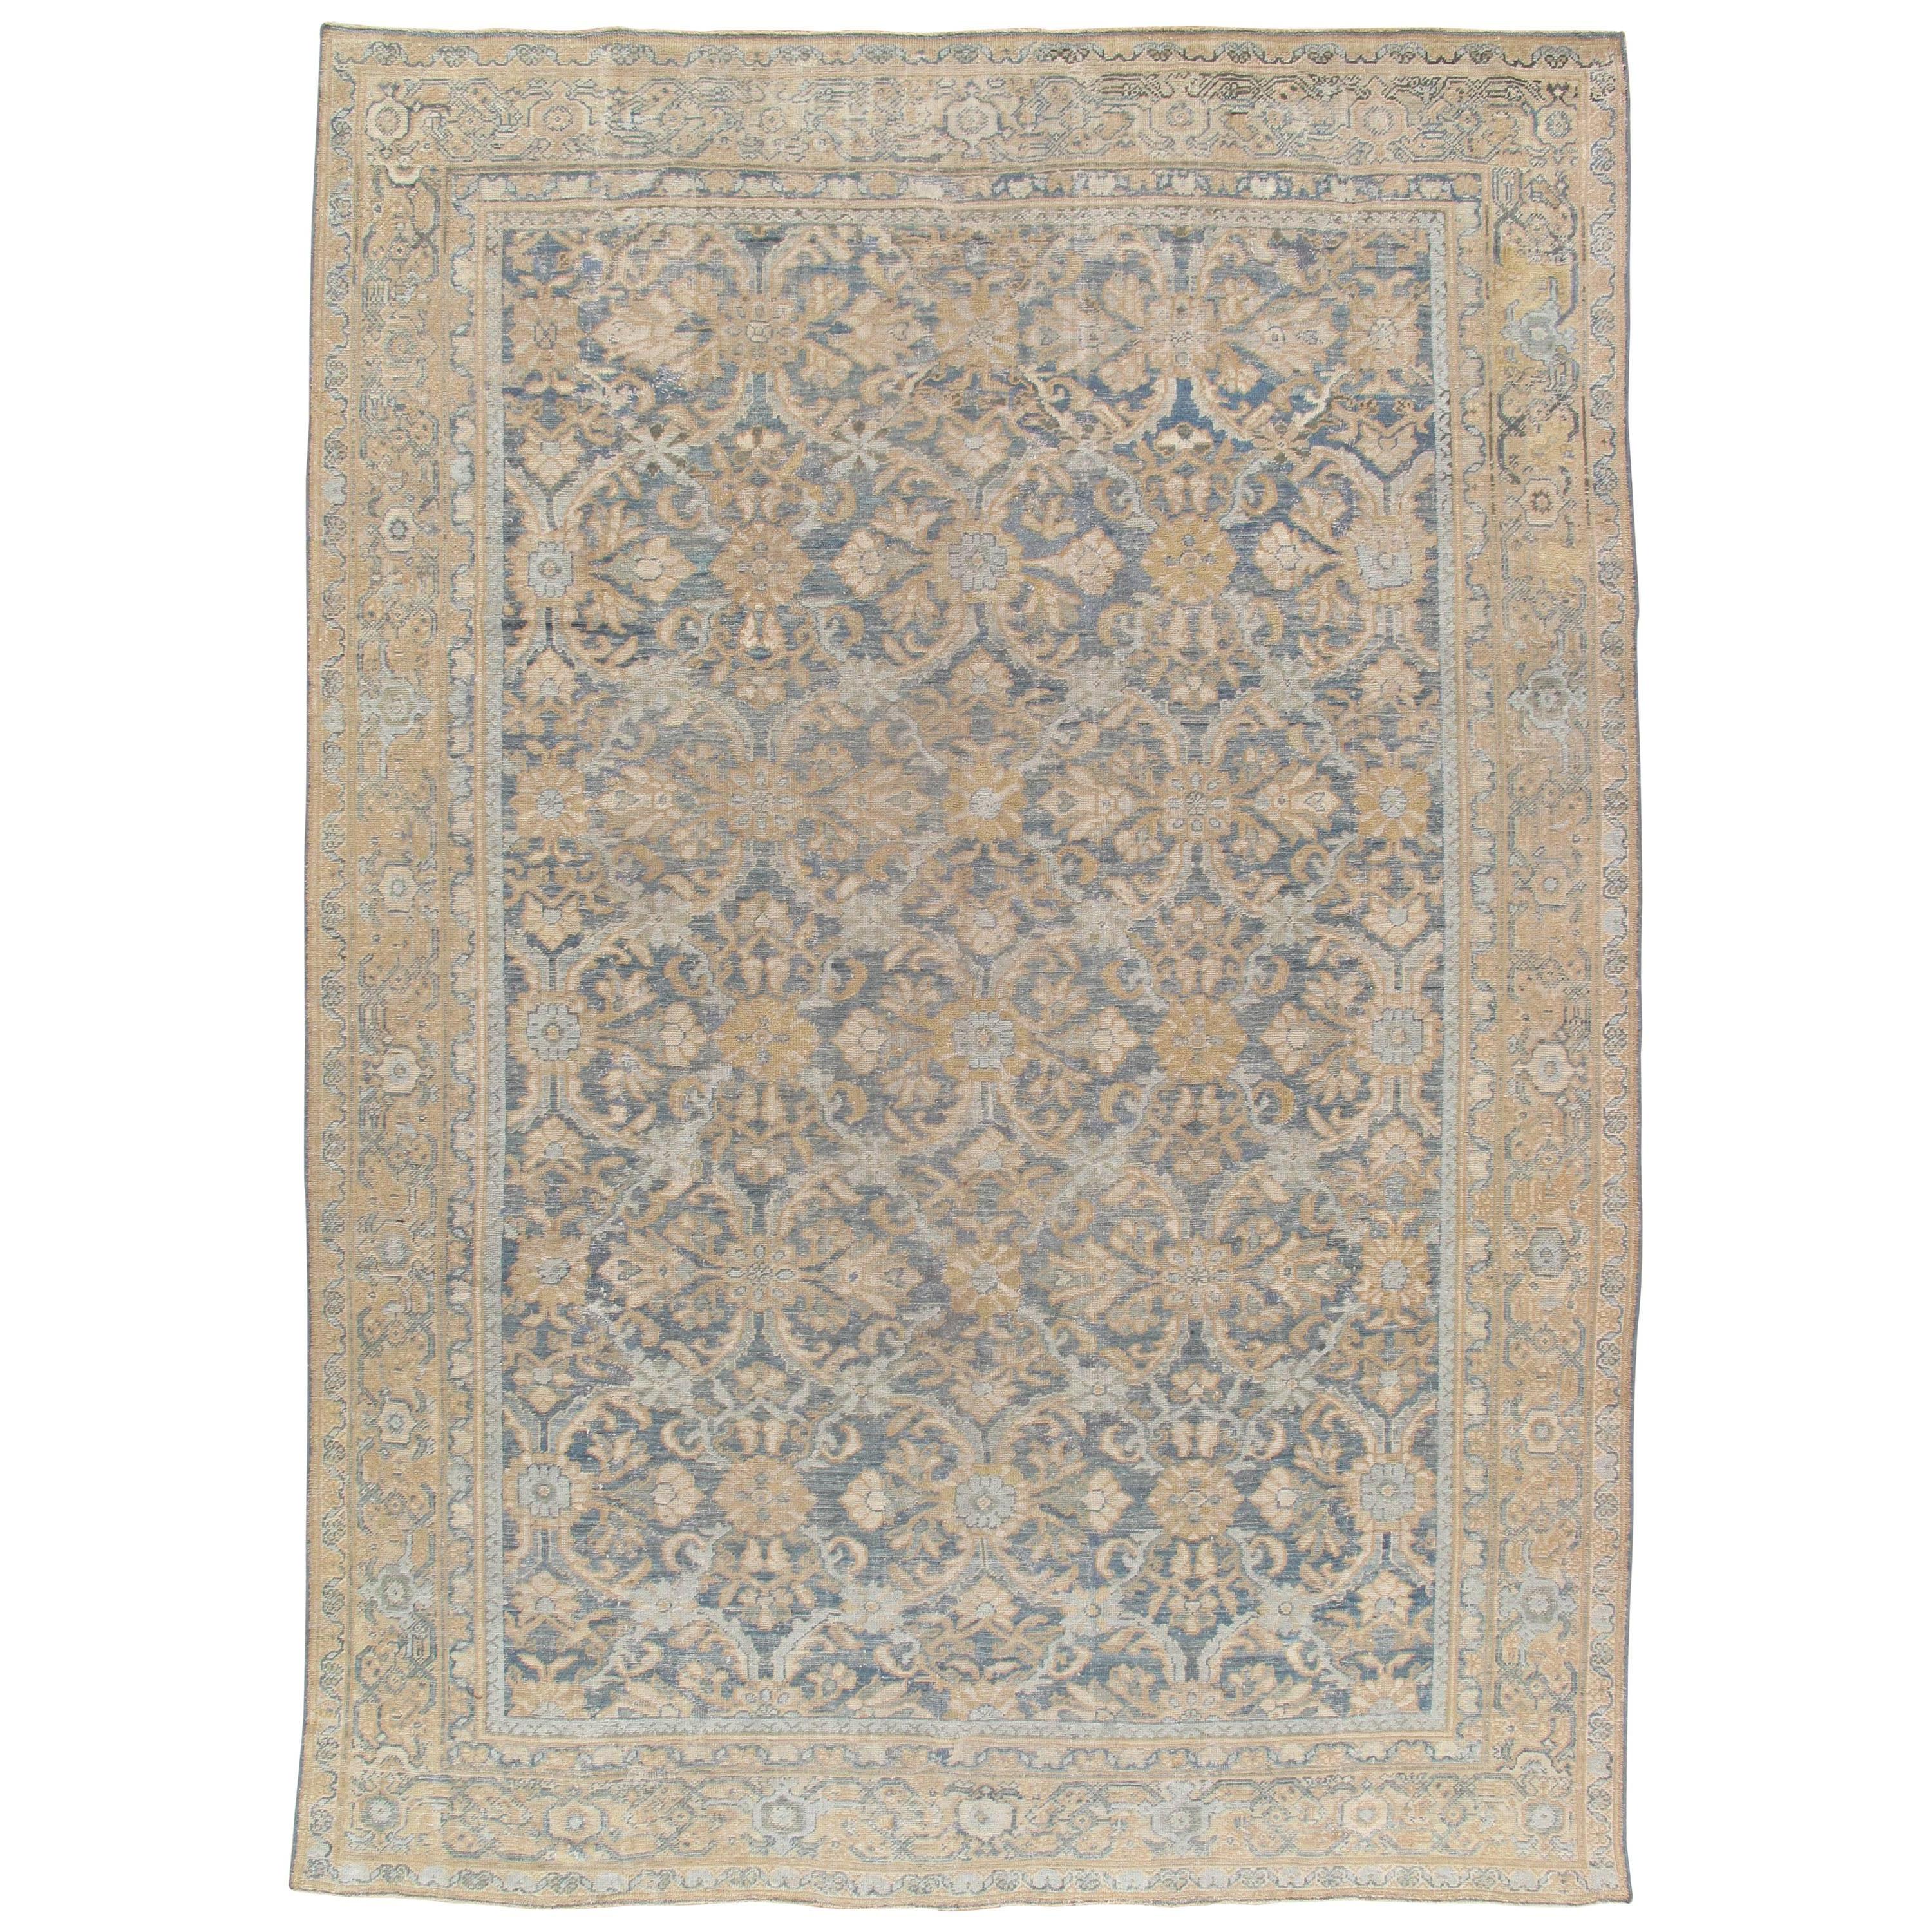 Antique Persian Sultanabad Carpet, Handmade Oriental Rug, Light Blue, Taupe Fine